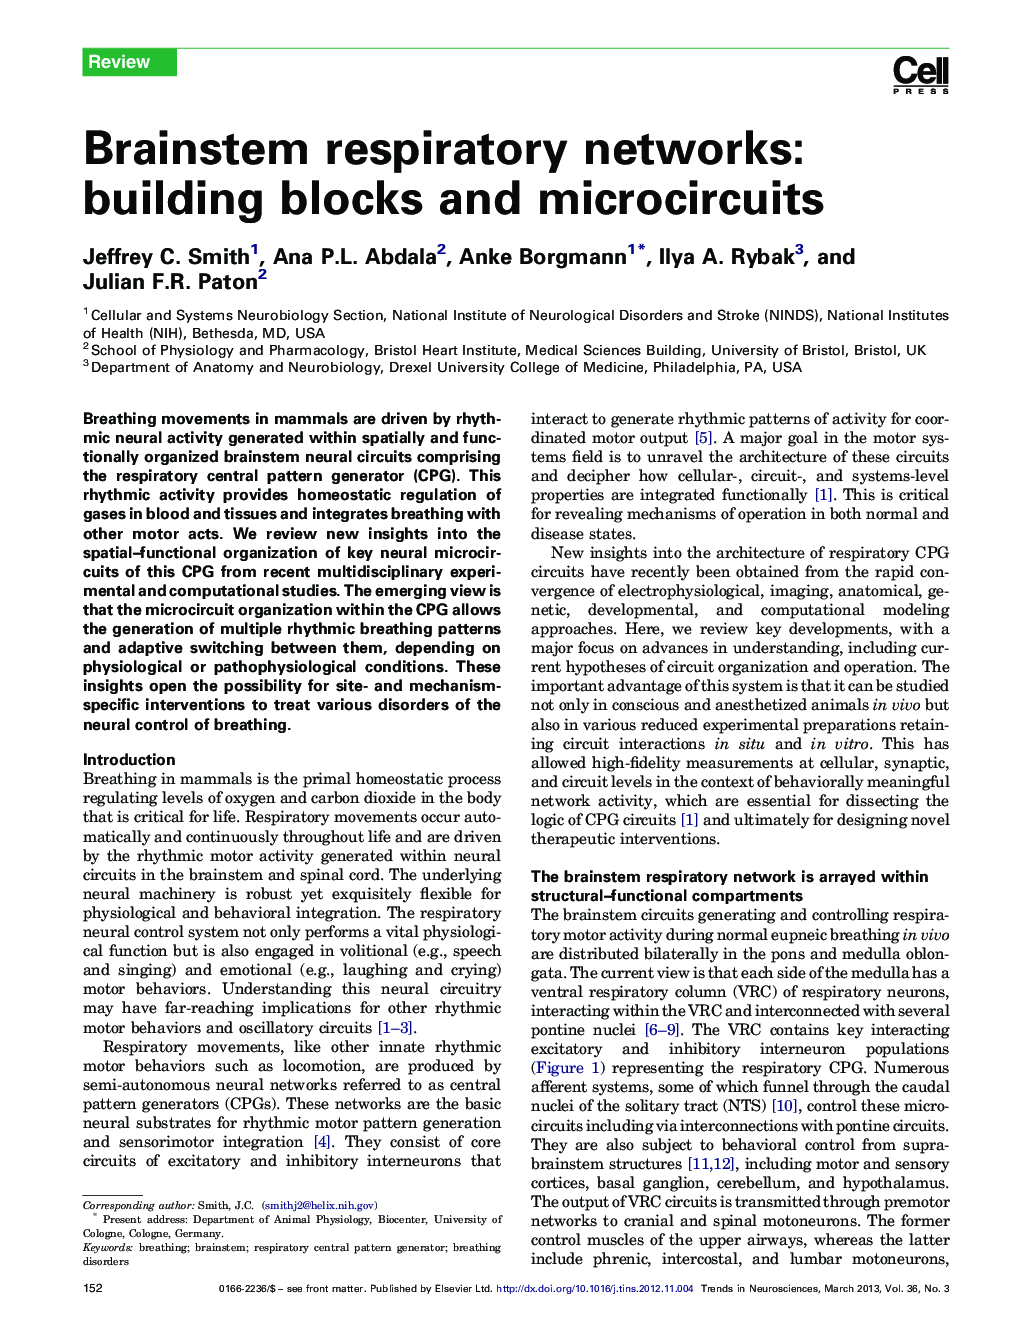 Brainstem respiratory networks: building blocks and microcircuits